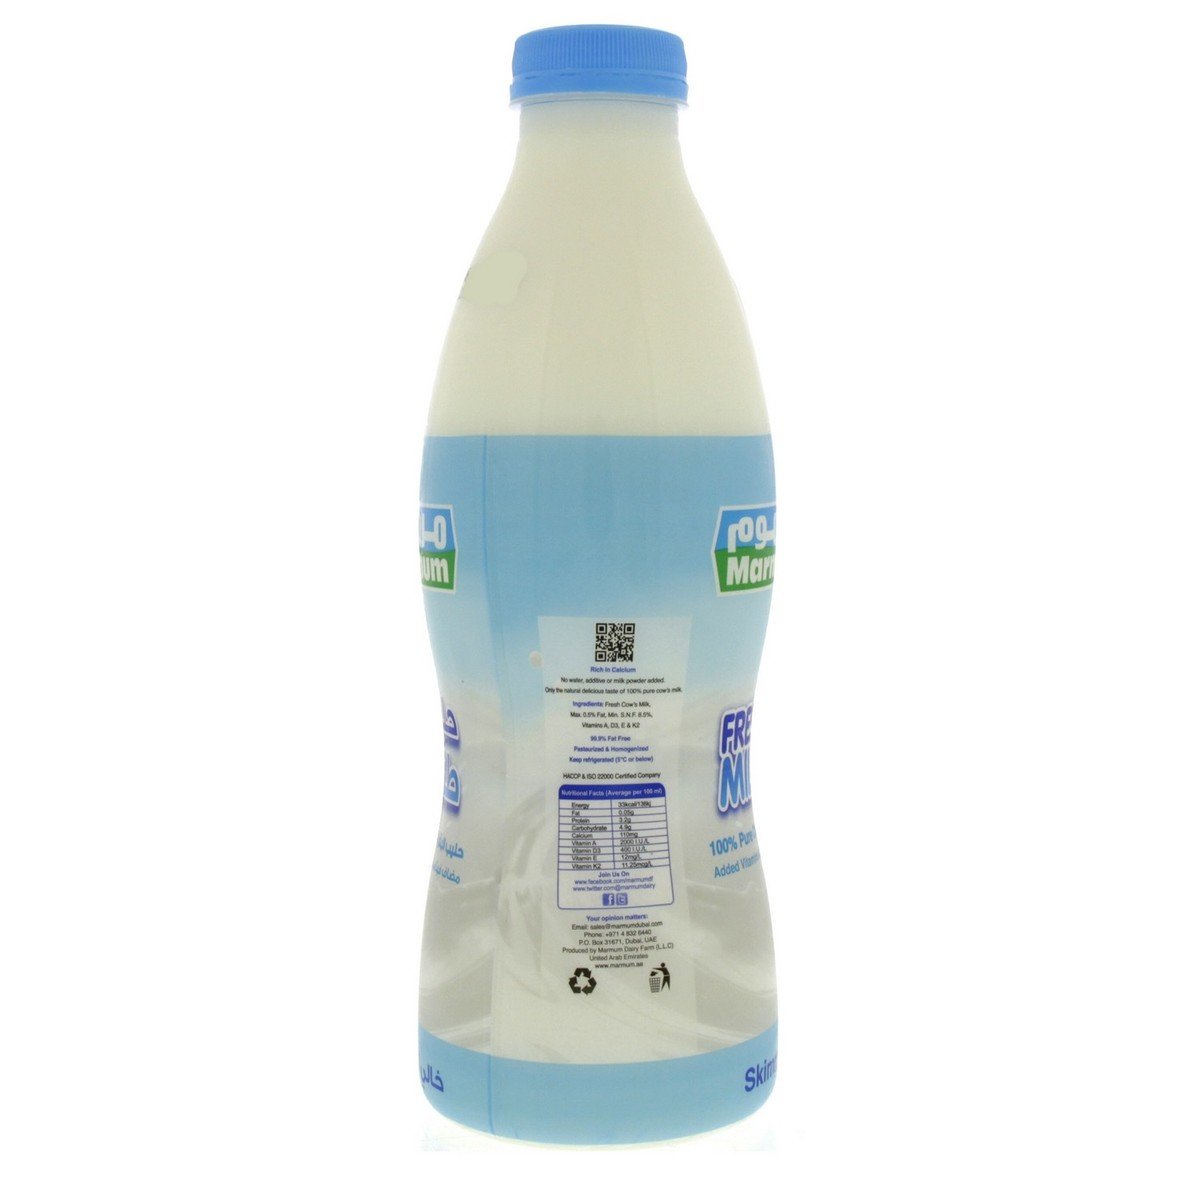 Marmum Fresh Milk Skimmed 1 Litre